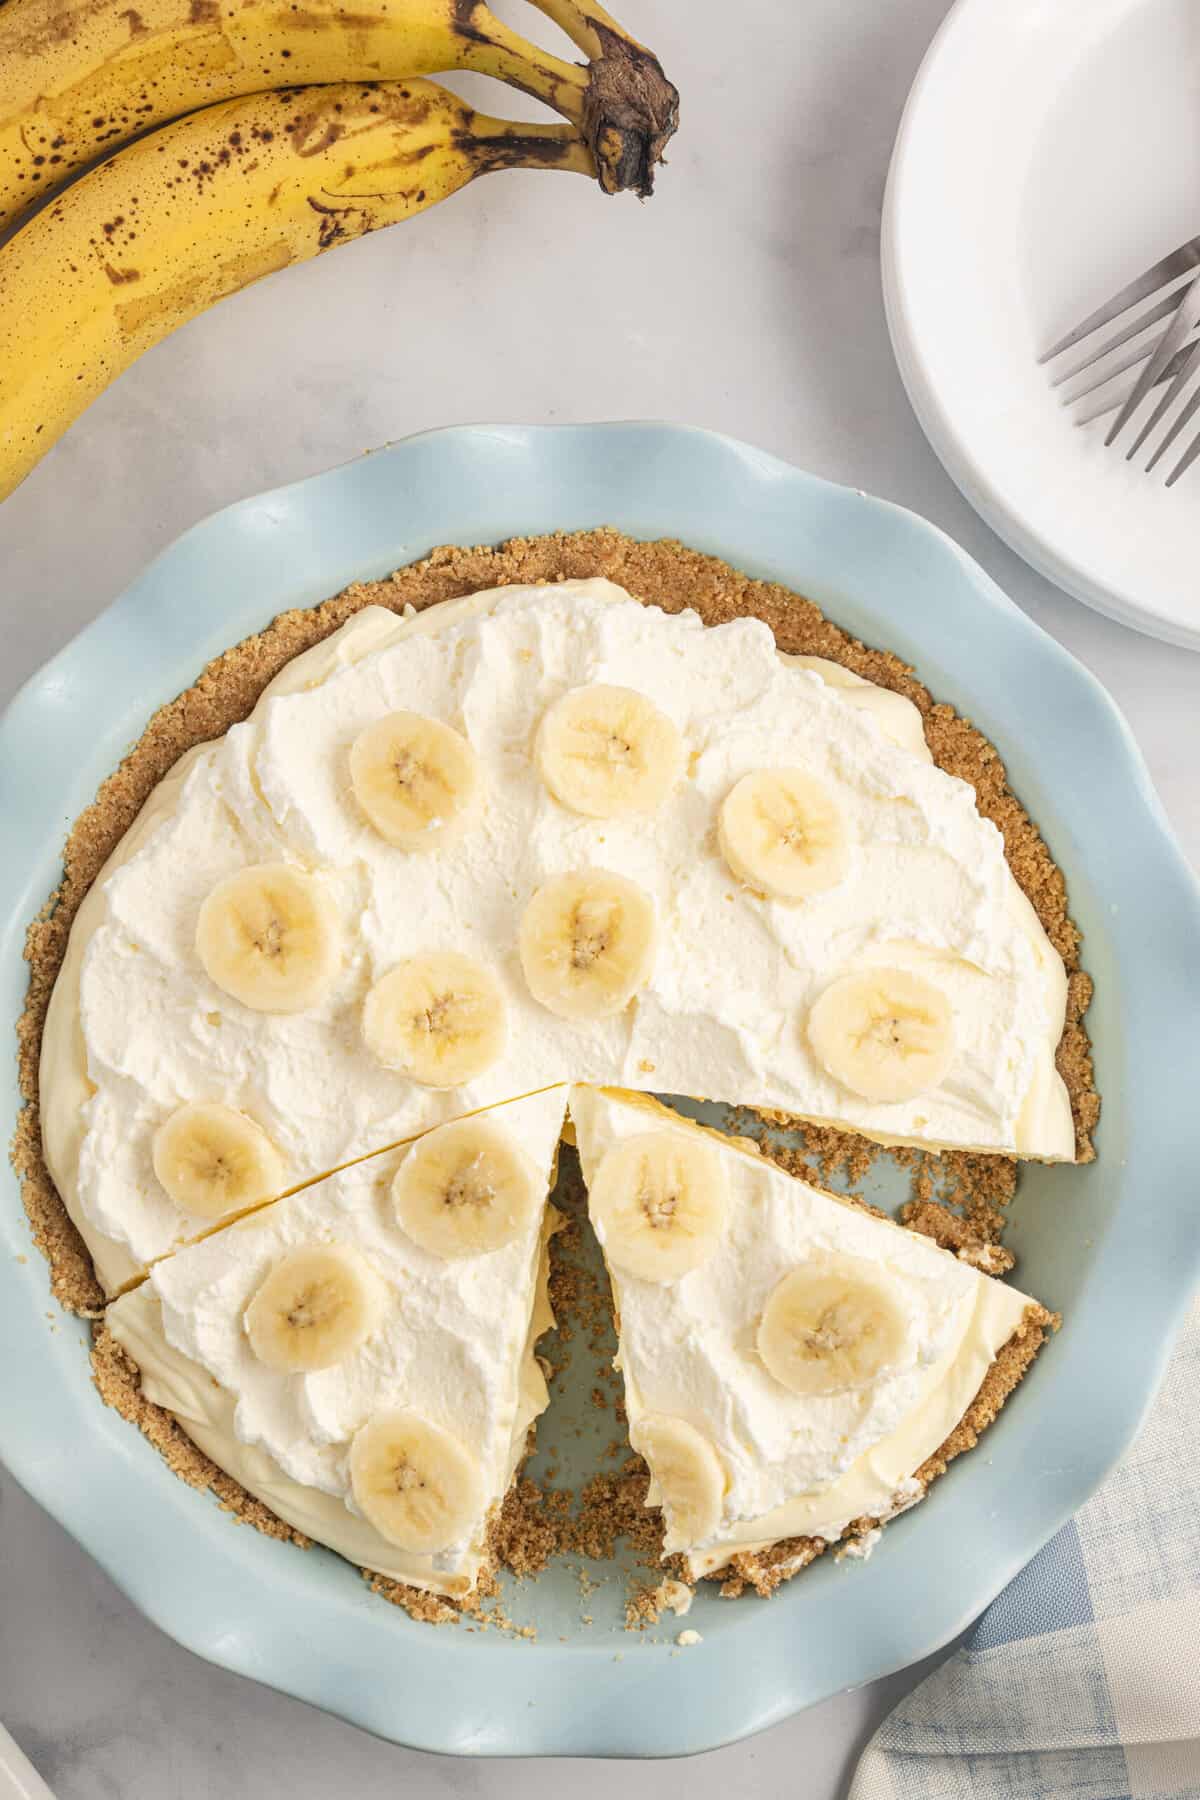 A slice of banana cream pie is still in the pie dish.